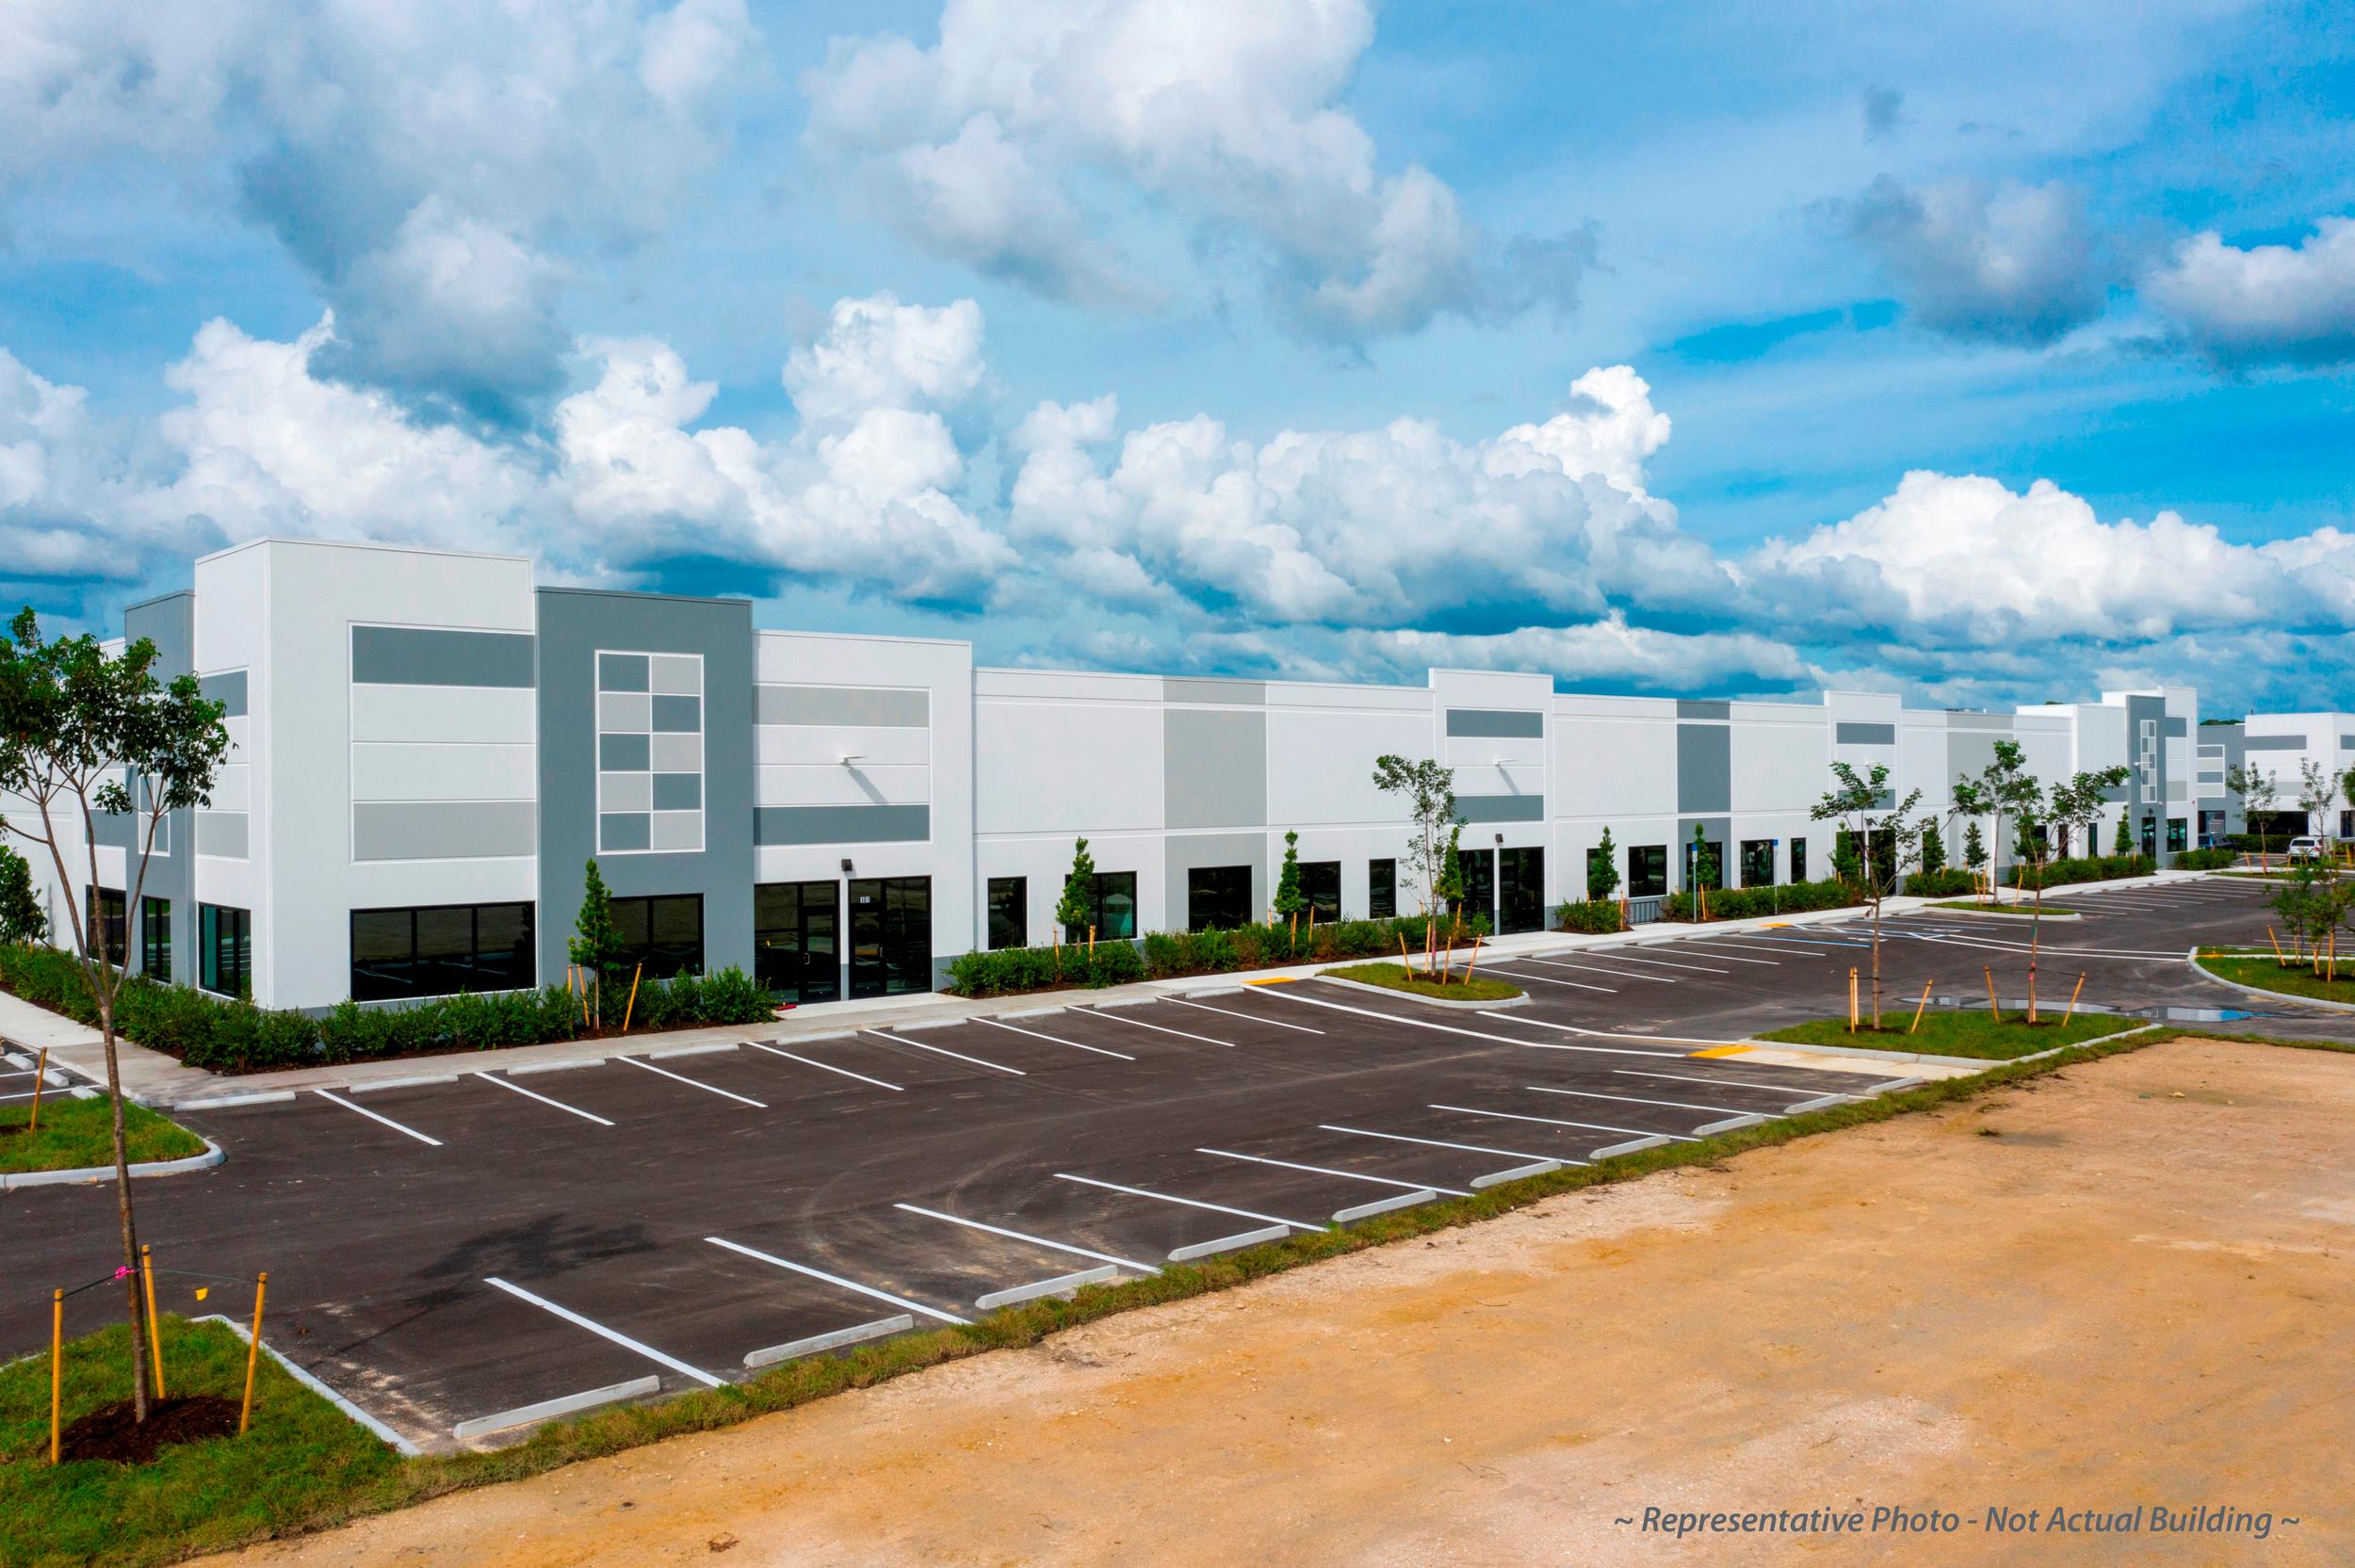 911 East Industrial Circle, Cape Coral, FL 33909 Cape Coral,FL